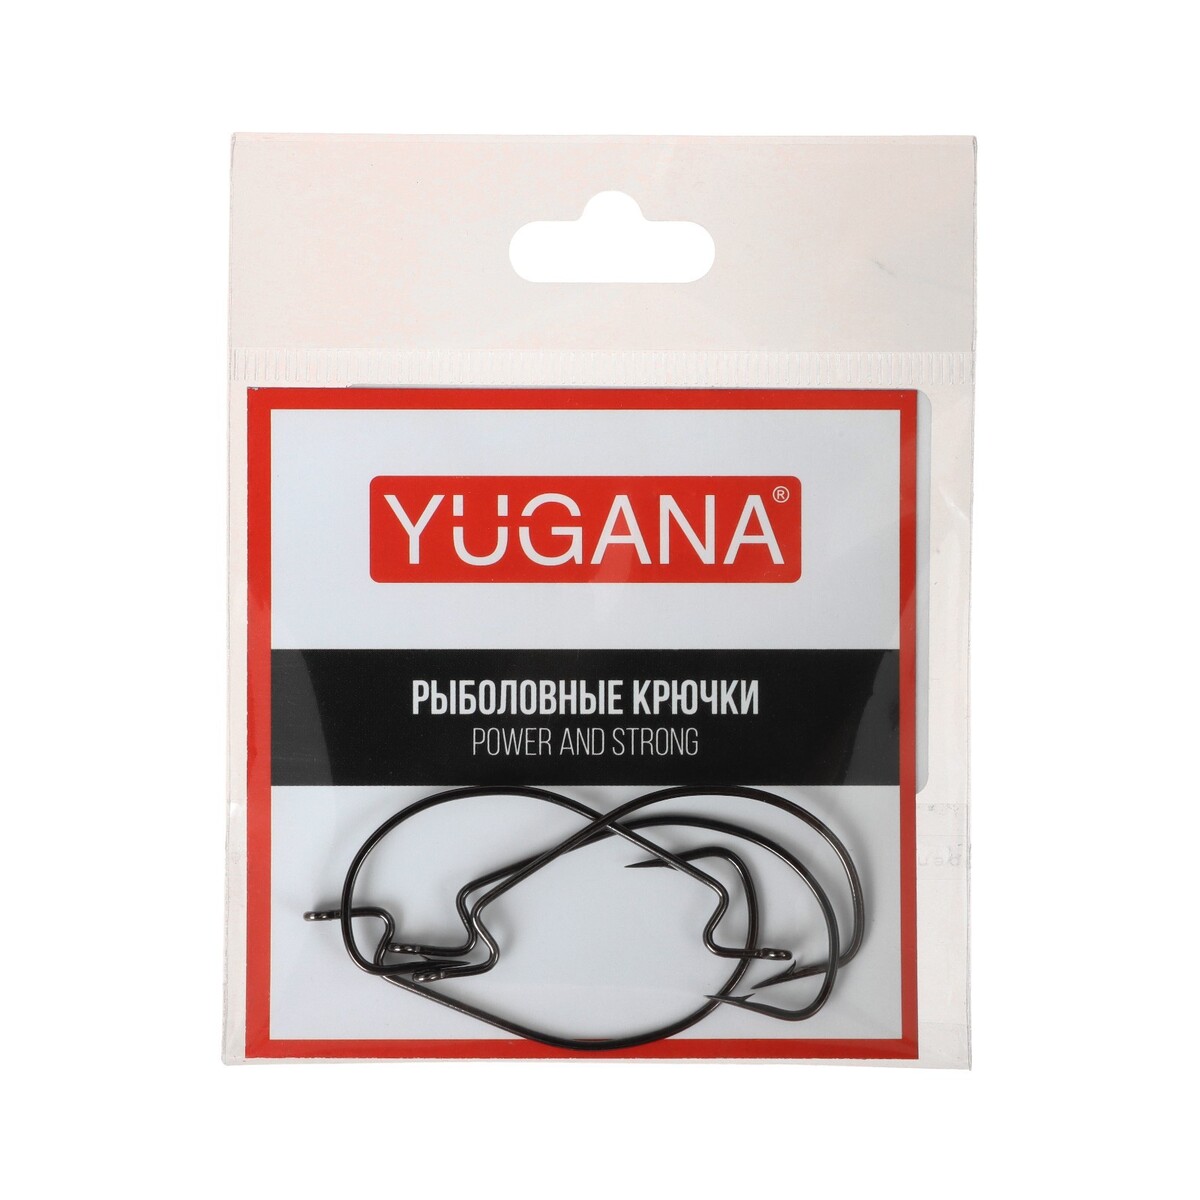   yugana wide range worm,   1/0, 4 